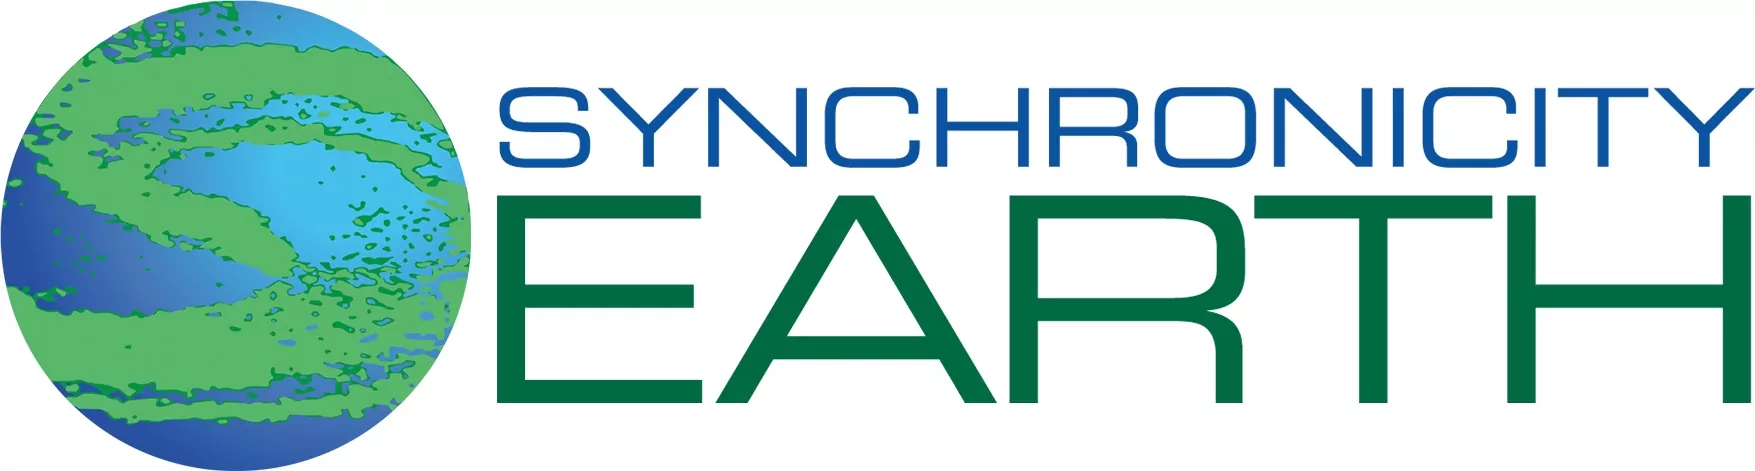 Synchronicity Earth logo